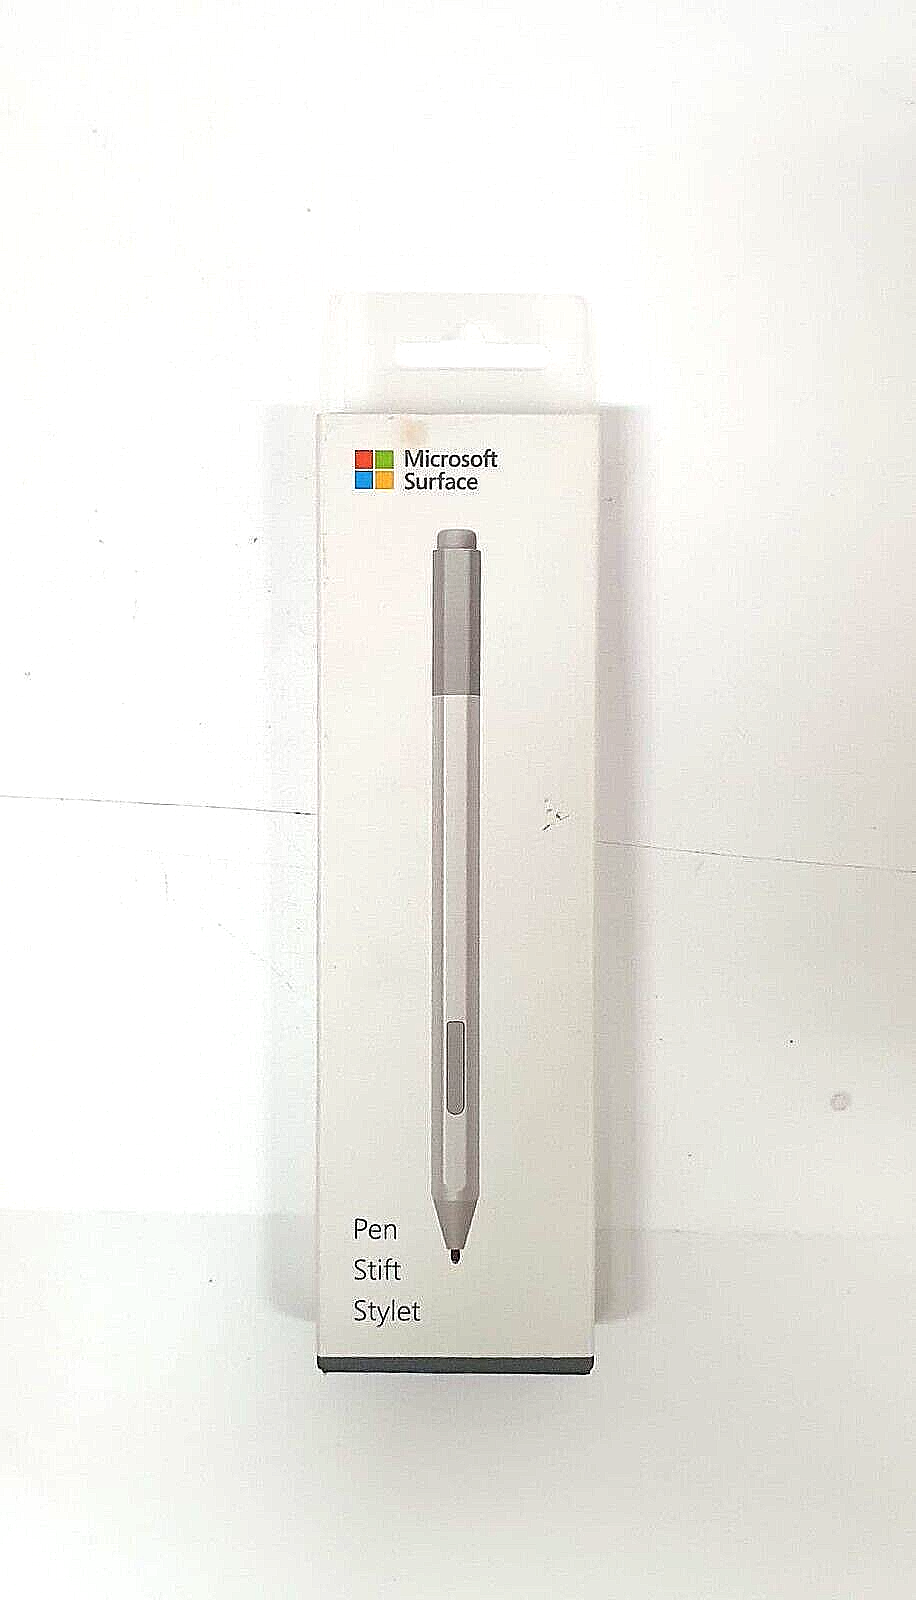 Genuine-Microsoft-Surface-Pro-Stylus-Pen-Stift-Stylet-Model-1776-Silver-165637538248-2